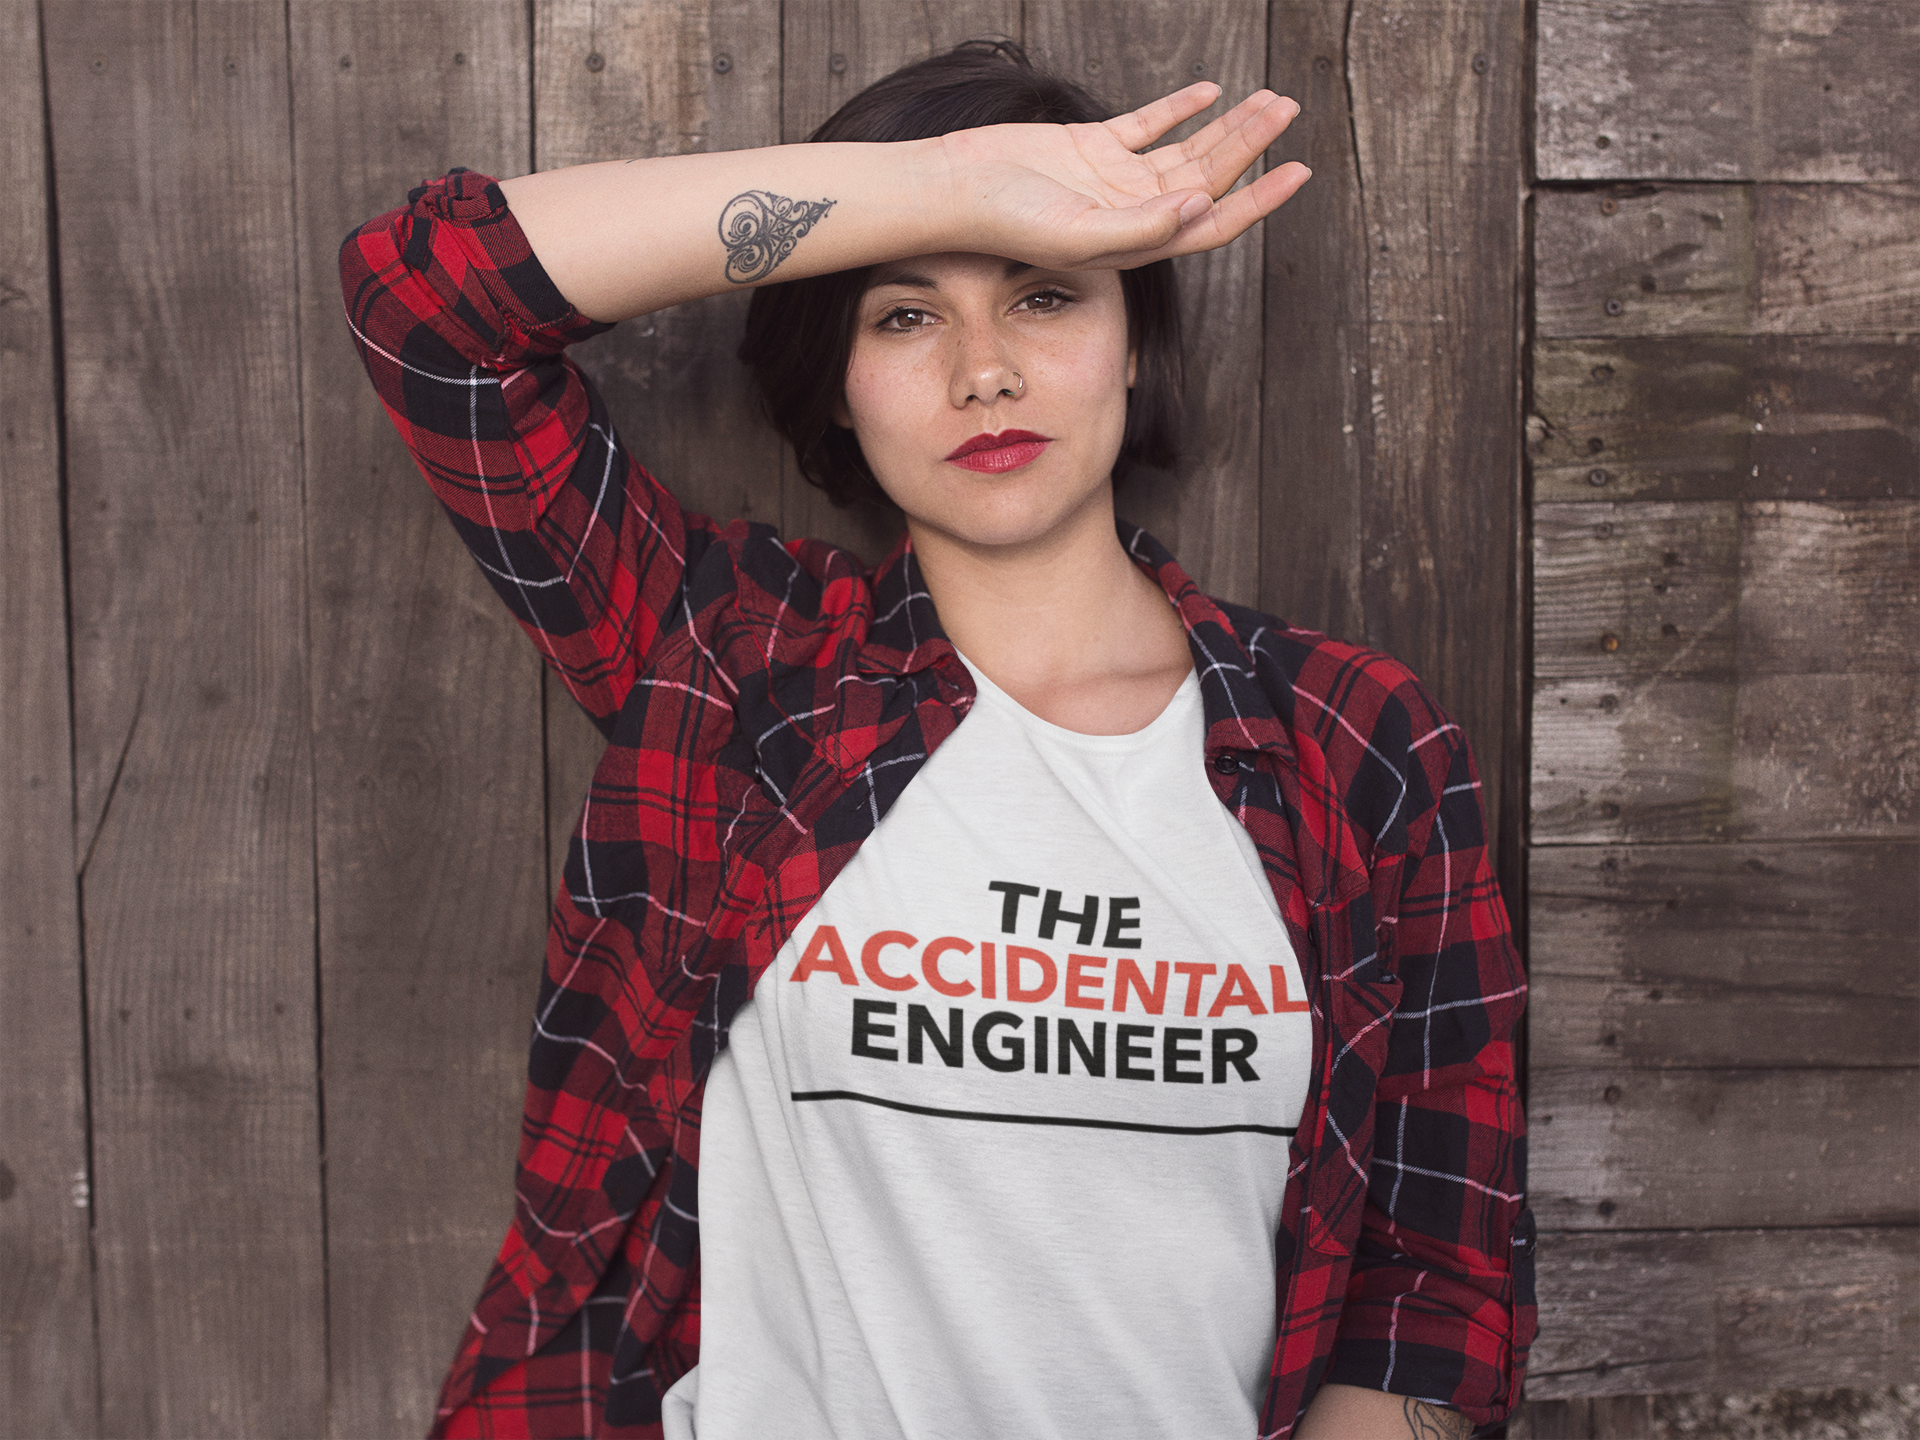 Accidental Engineer white T-shirt